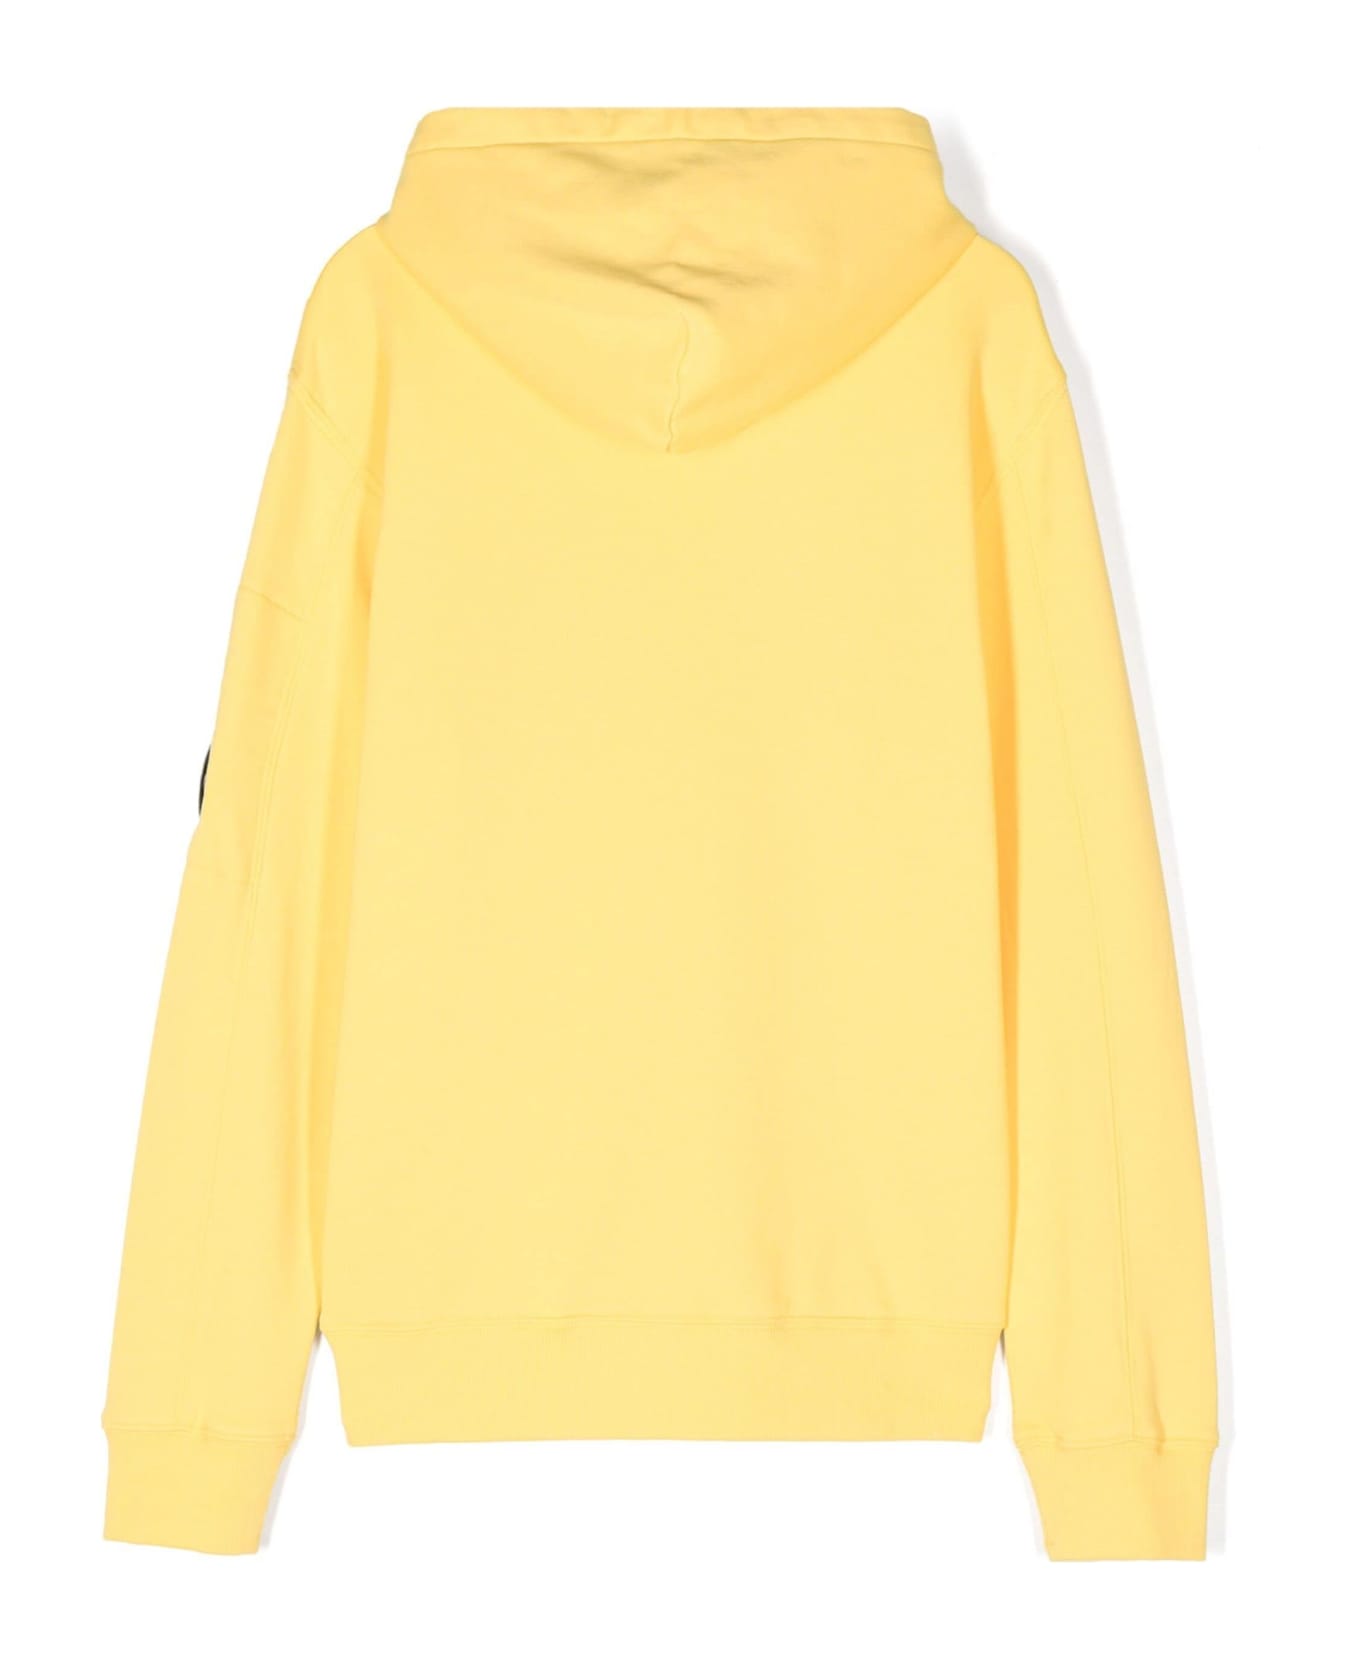 C.P. Company Sweaters Yellow - Yellow